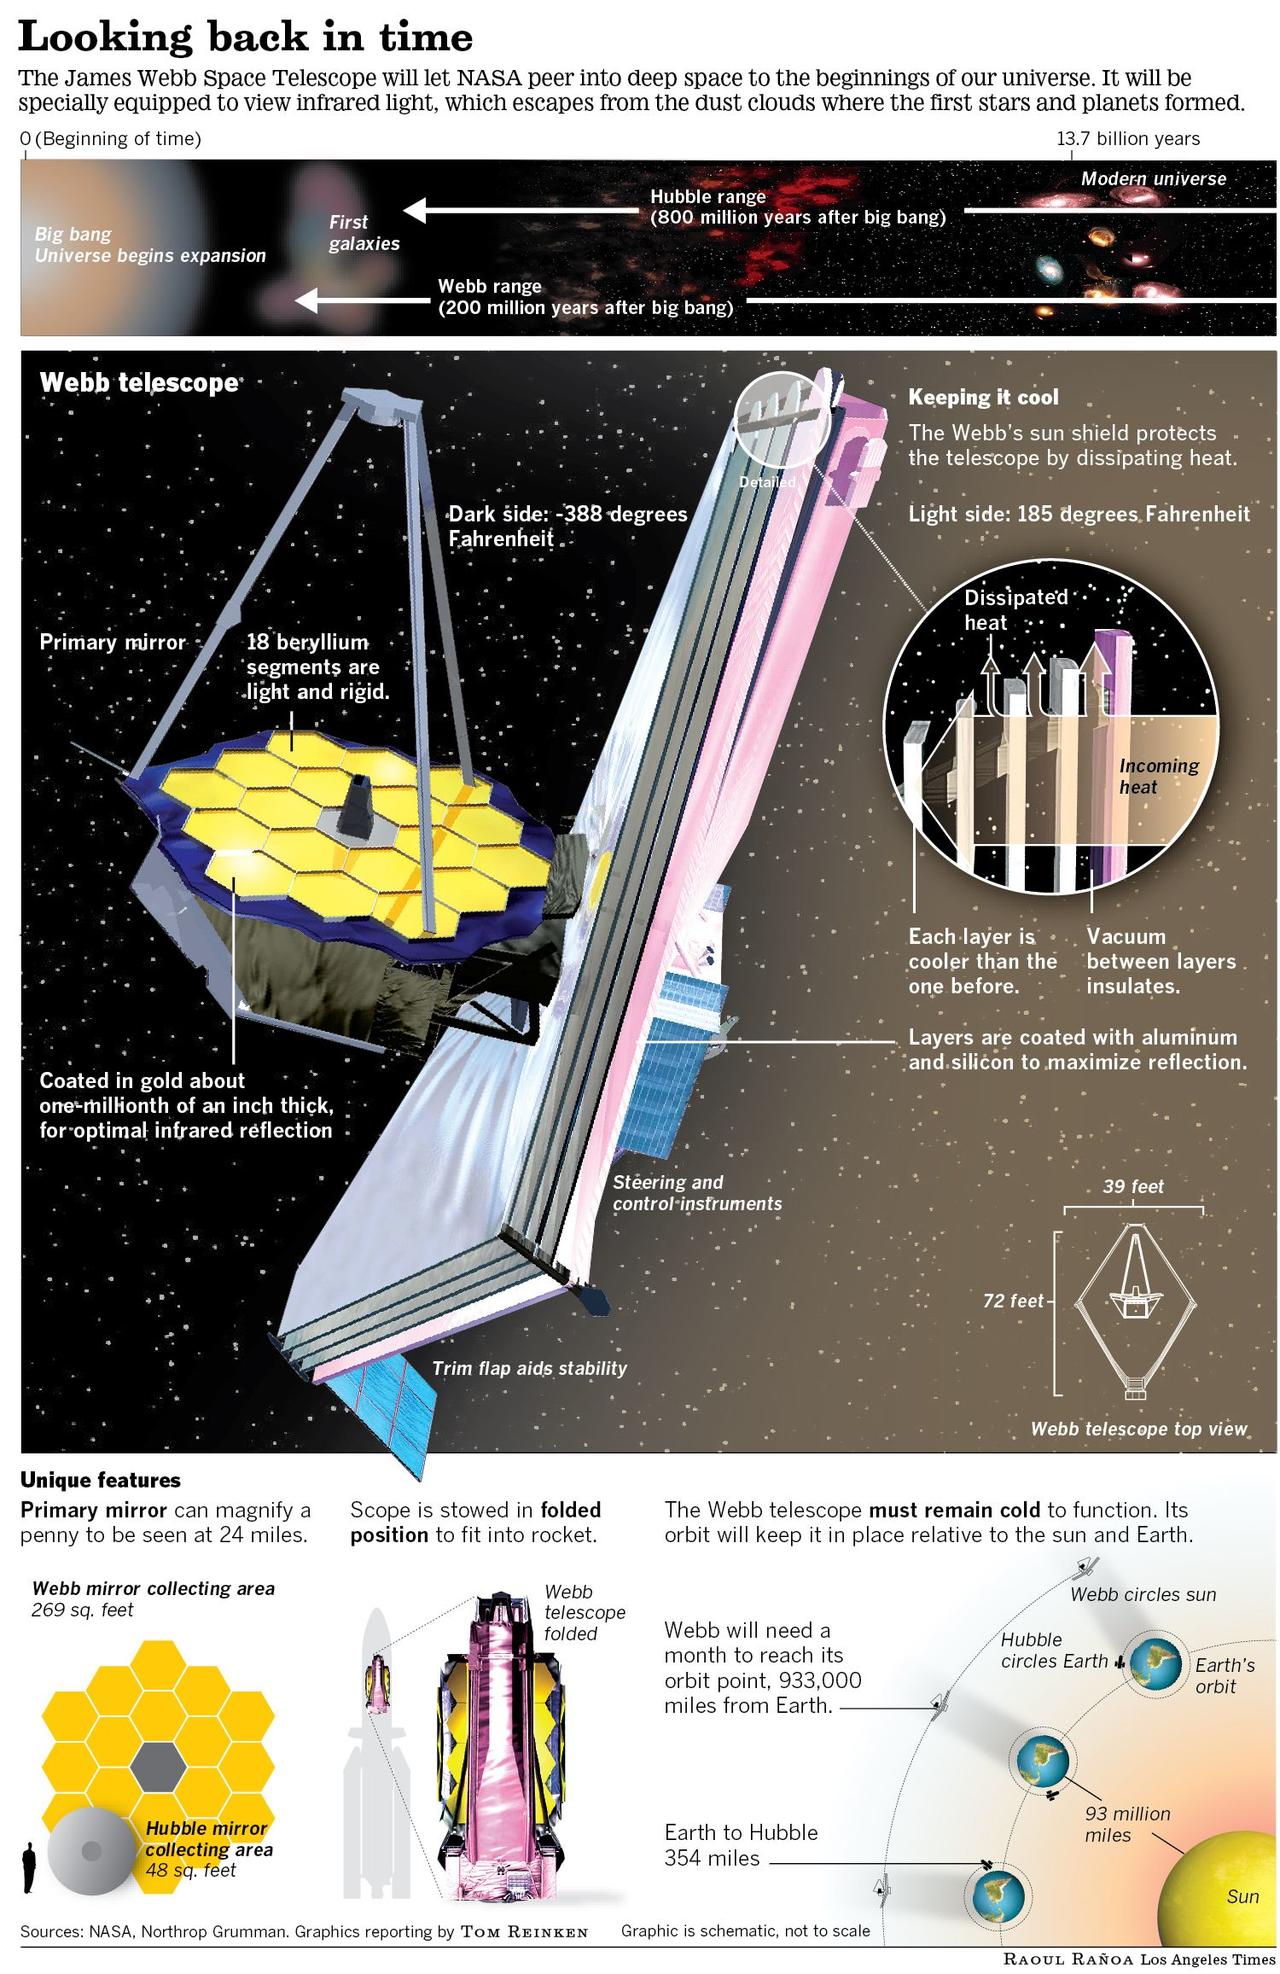 James Webb Space Telescope Infographic